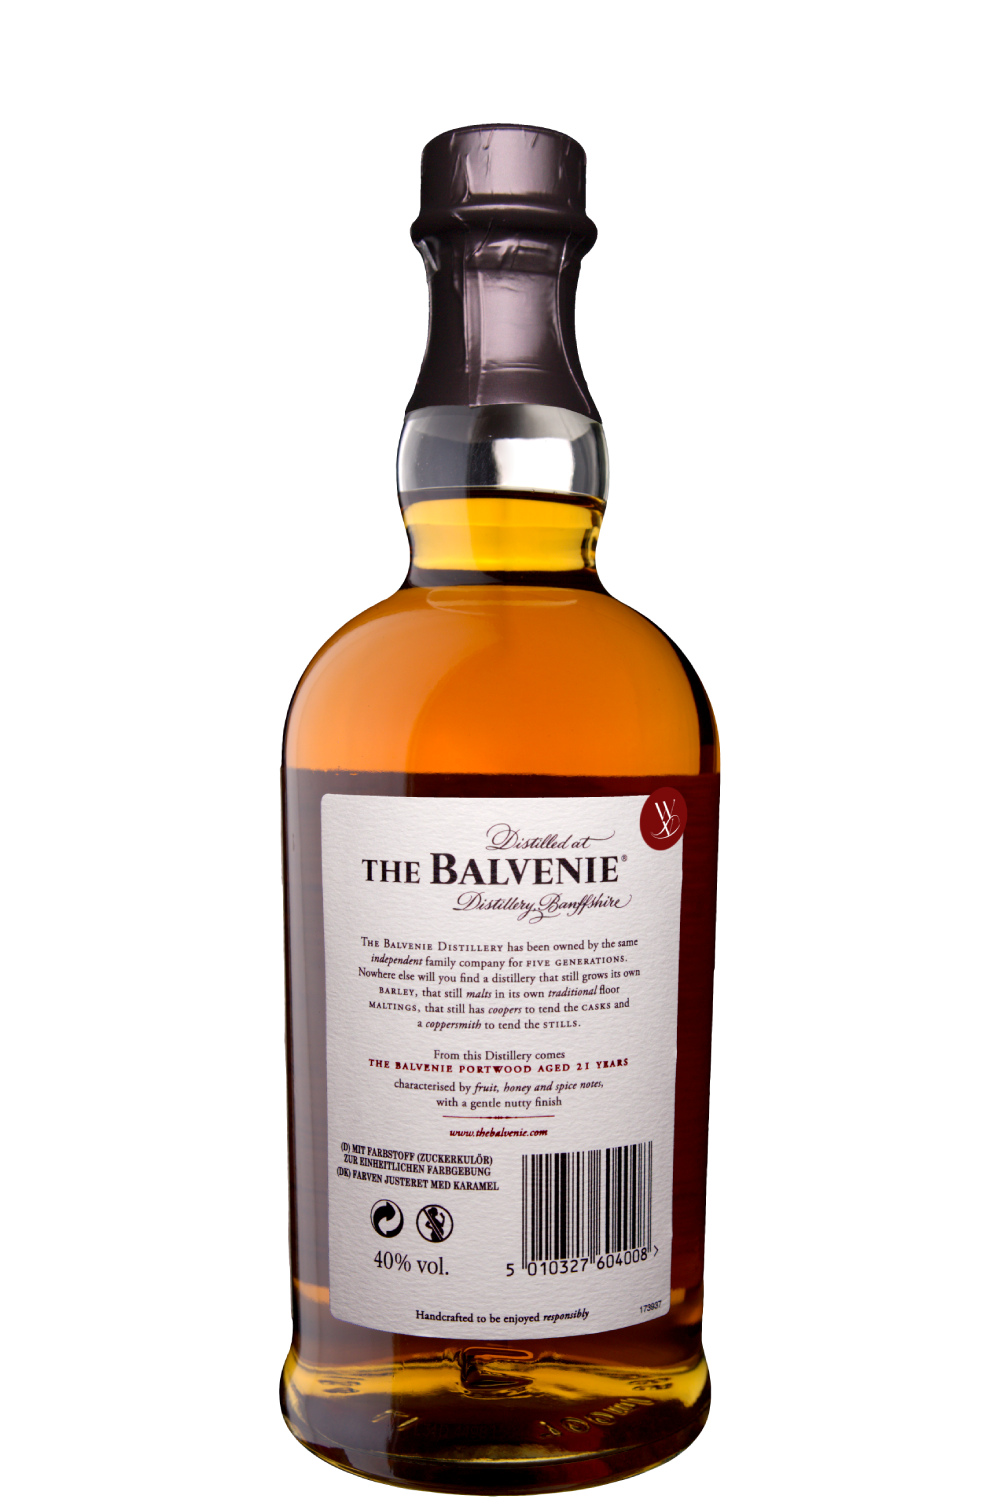 WineVins Whisky The Balvenie Portwood 21 Anos